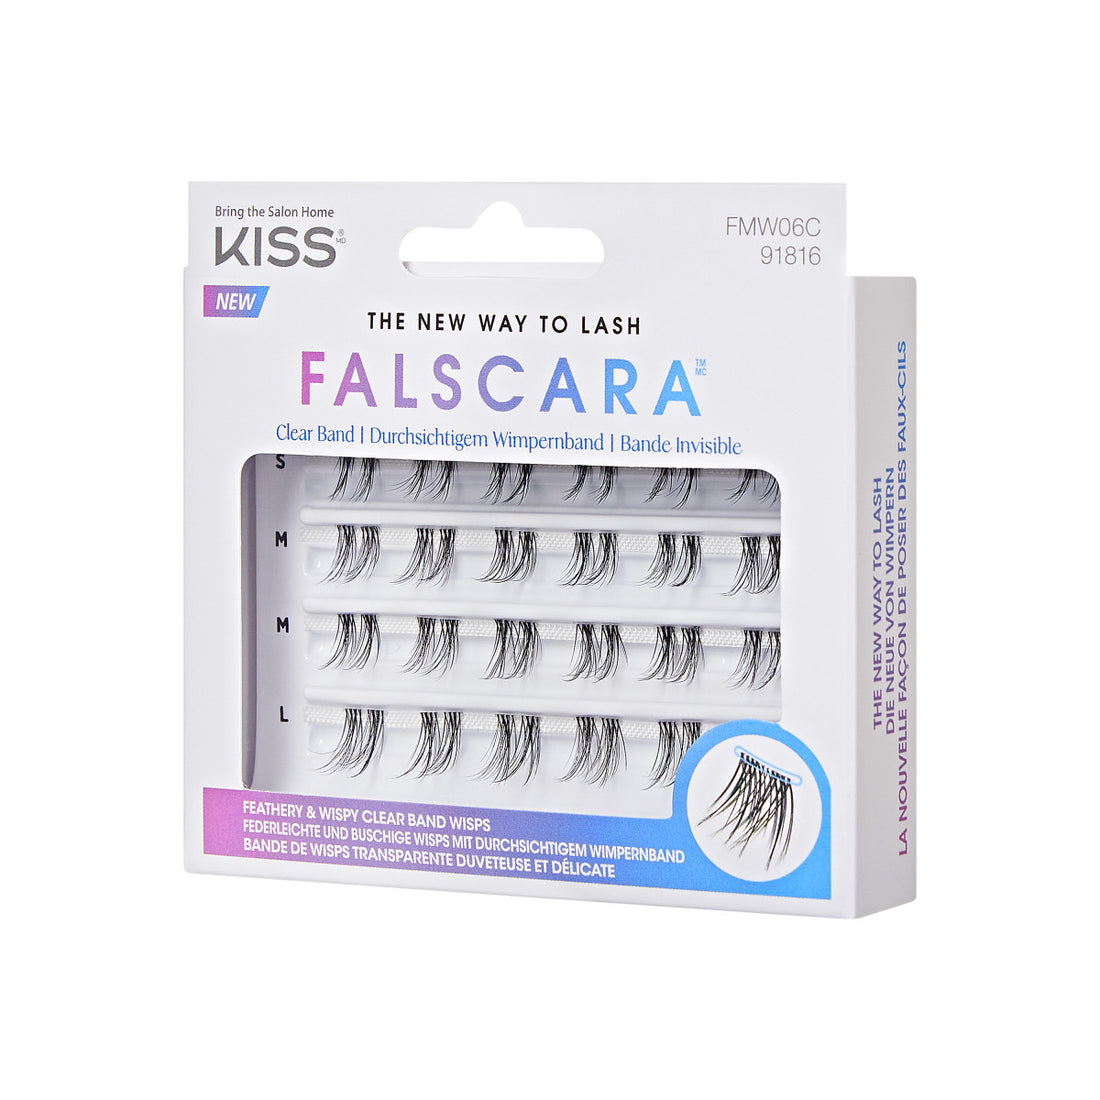 KISS FALSCARA Clear Band False Eyelash Extension Wisps Multipack, 24 ks